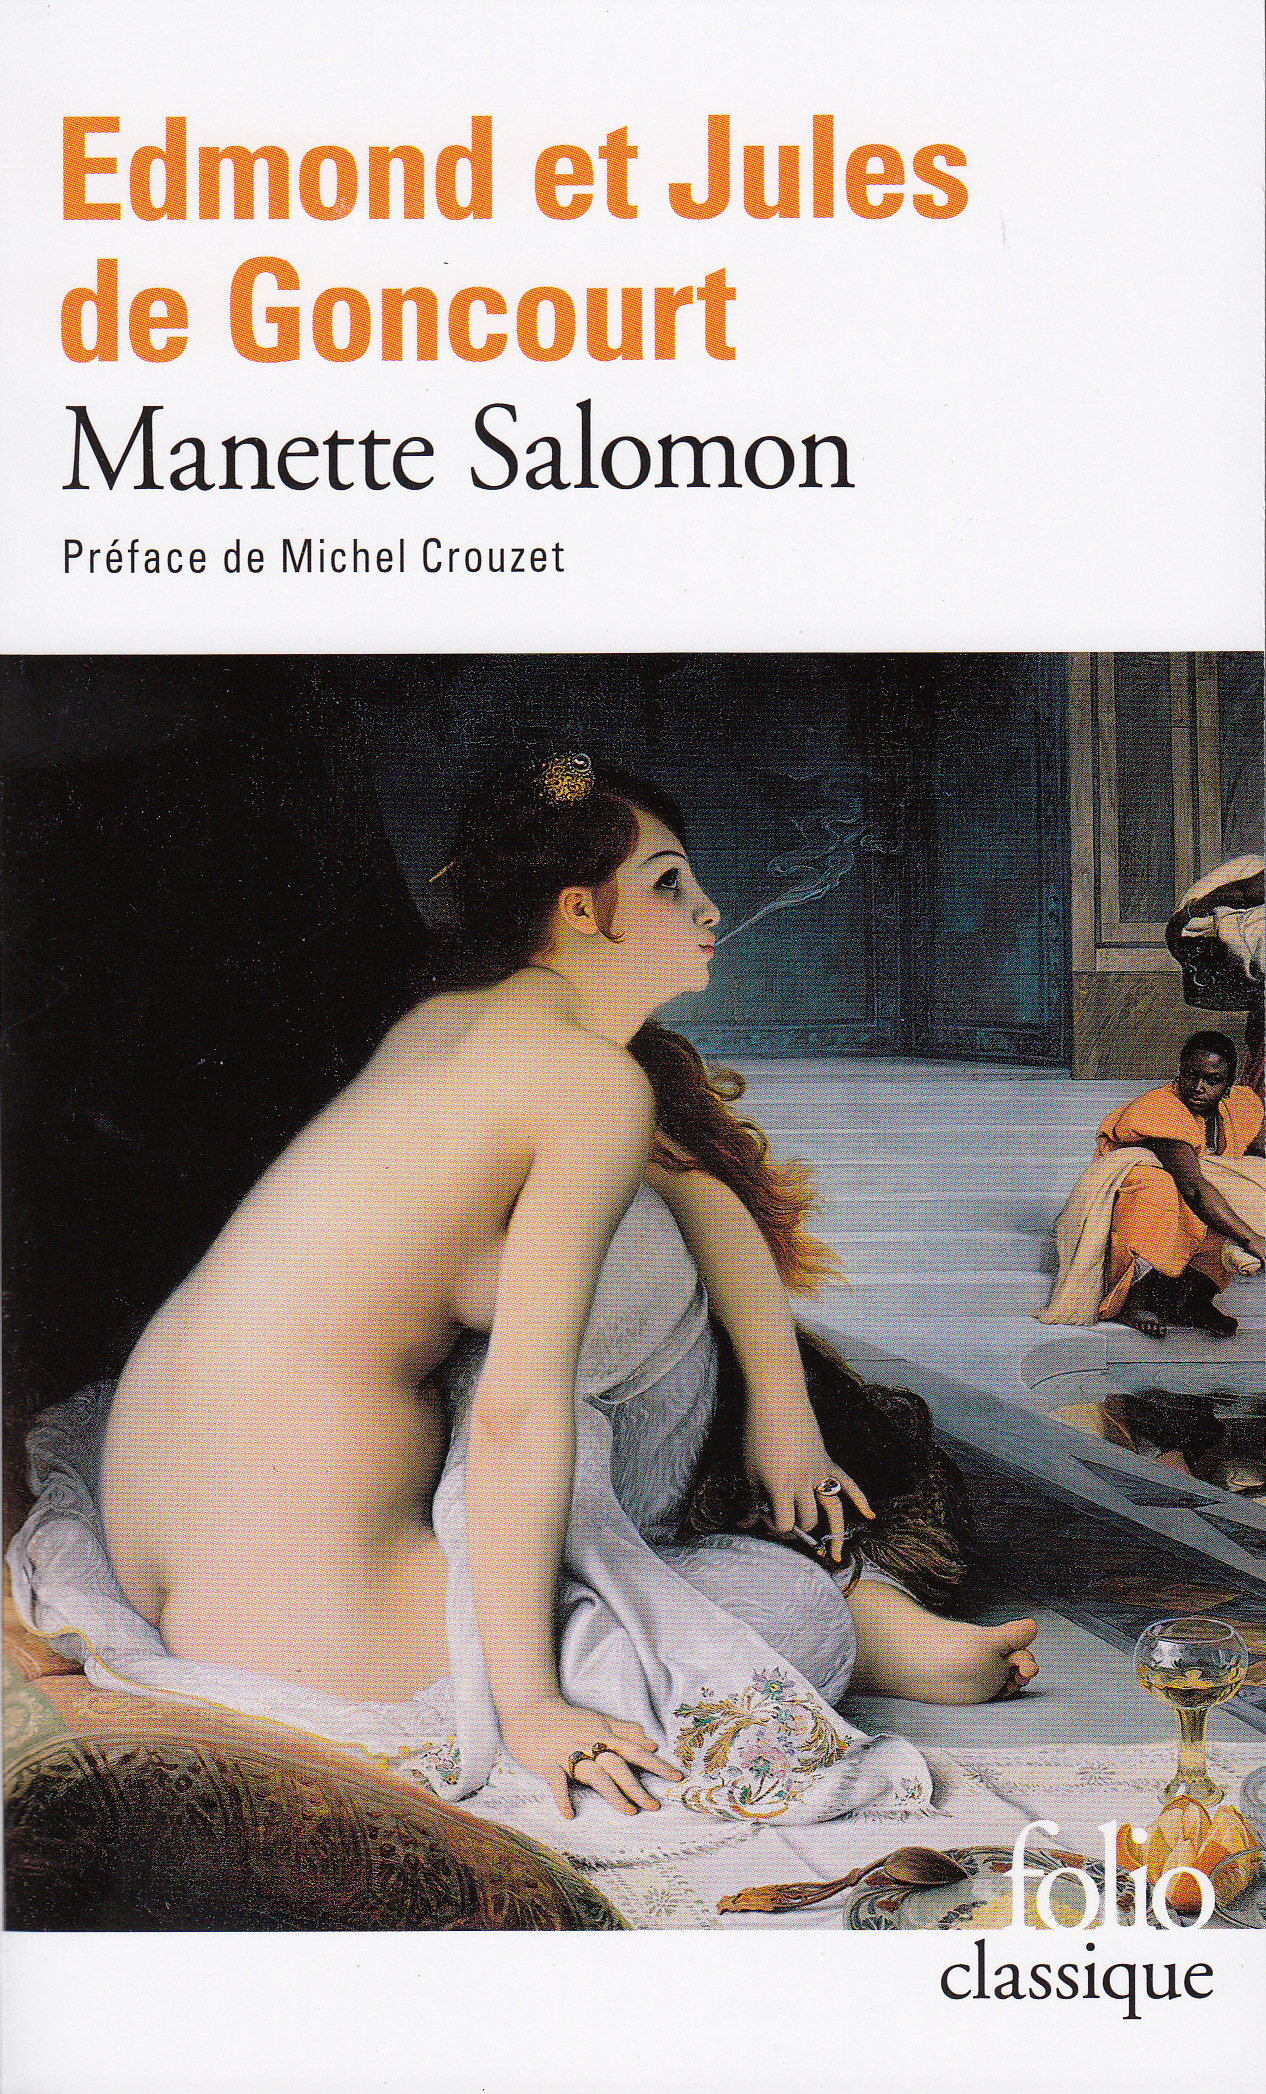 Manette Salomon (9782070387991-front-cover)